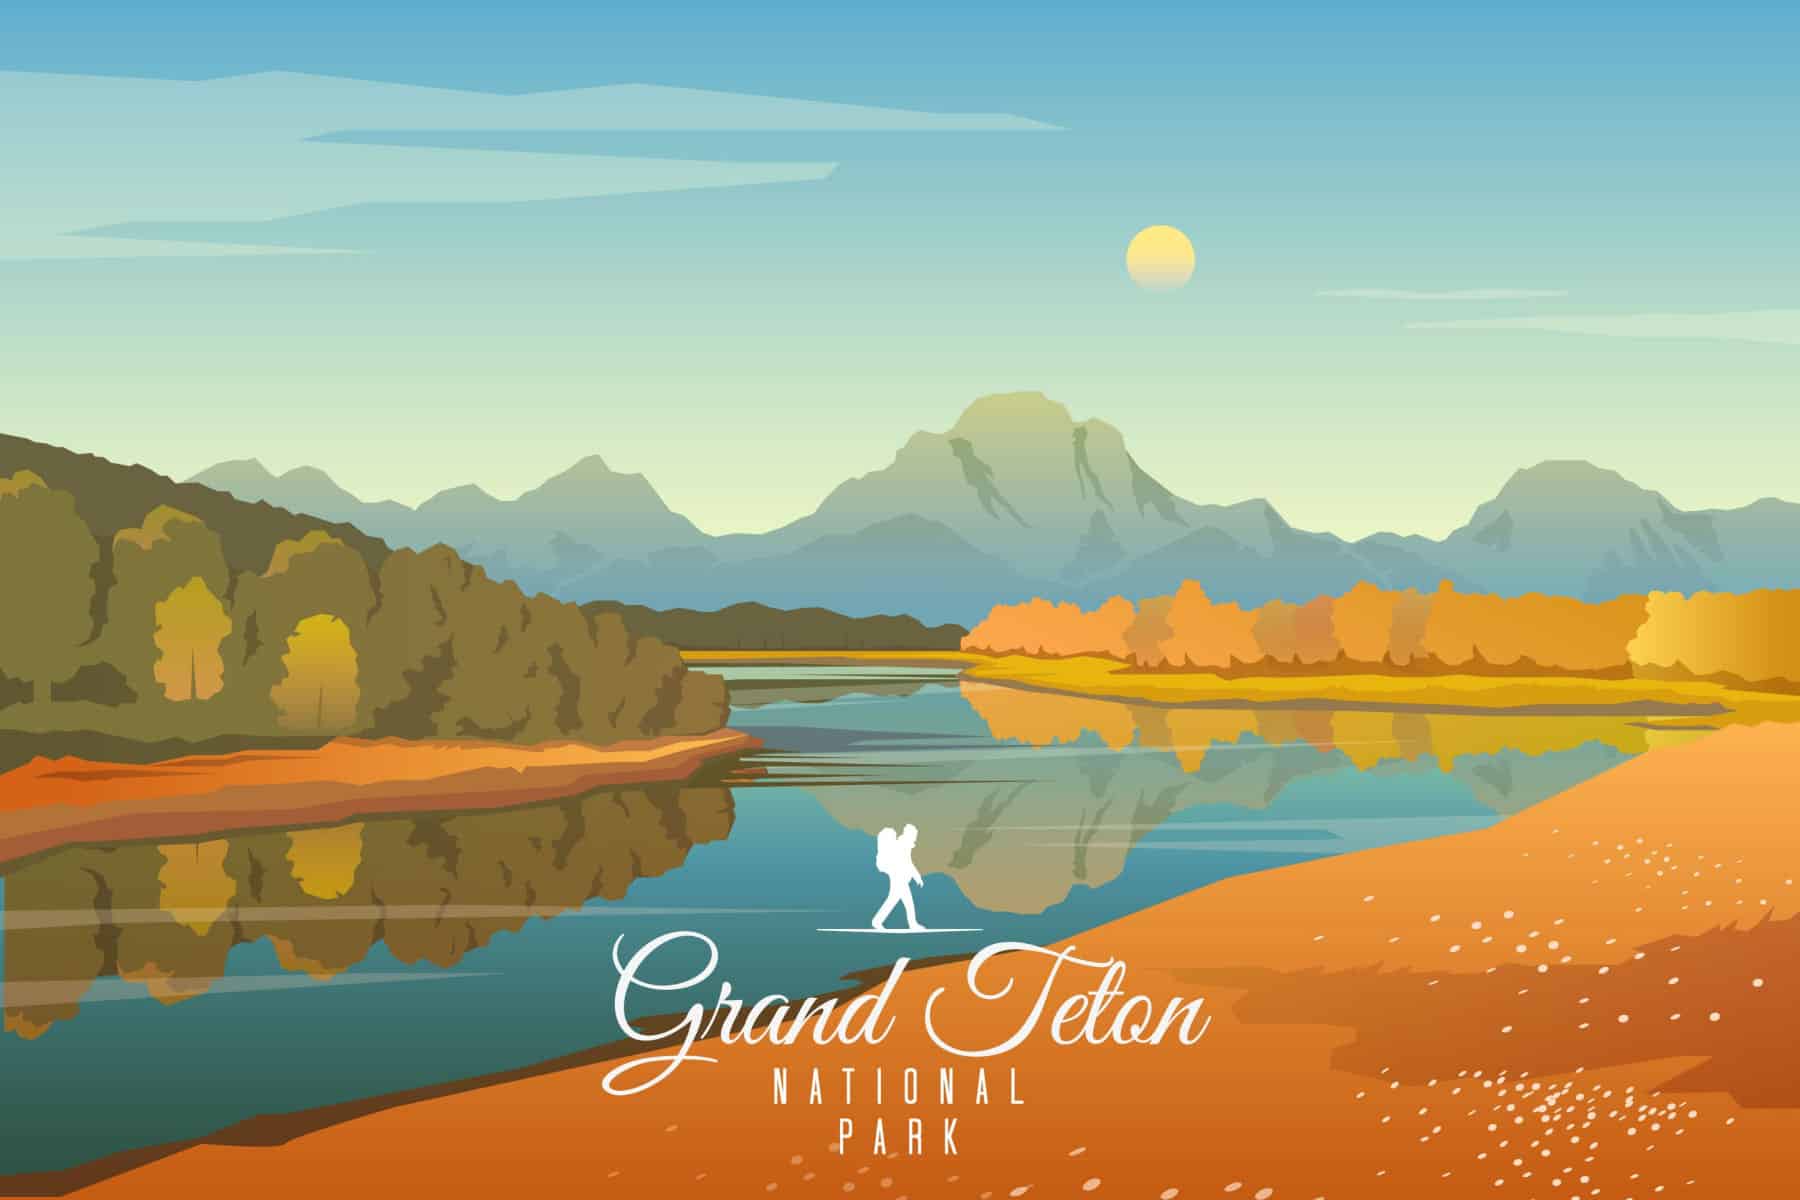 Grand Teton National Park Fact